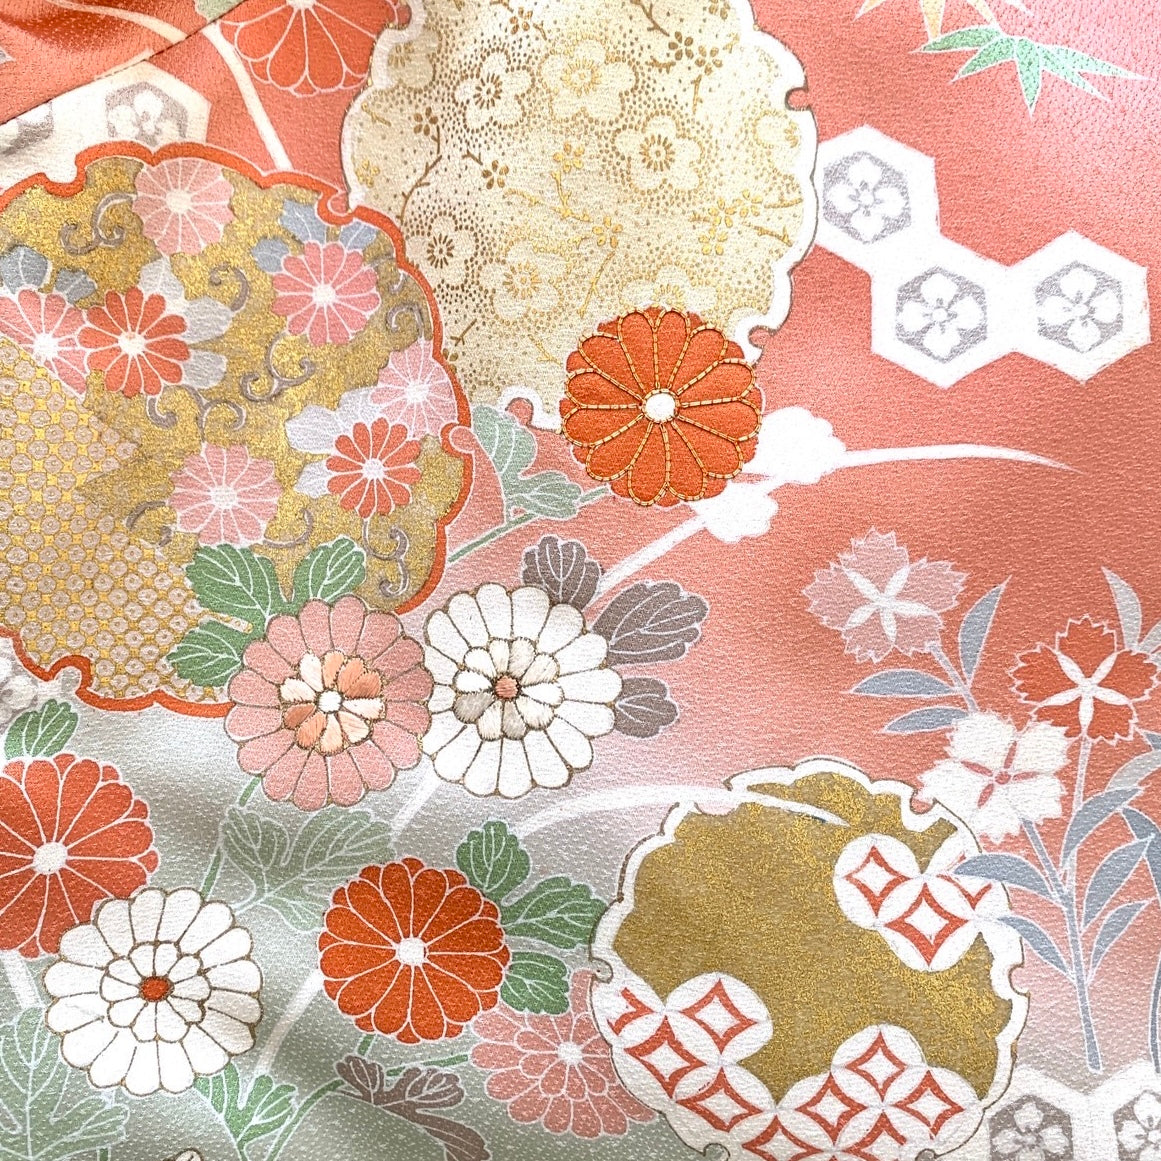 Kimono silk dress, Houmongi 訪問着, Handcrafted, Upcycled, #pre27